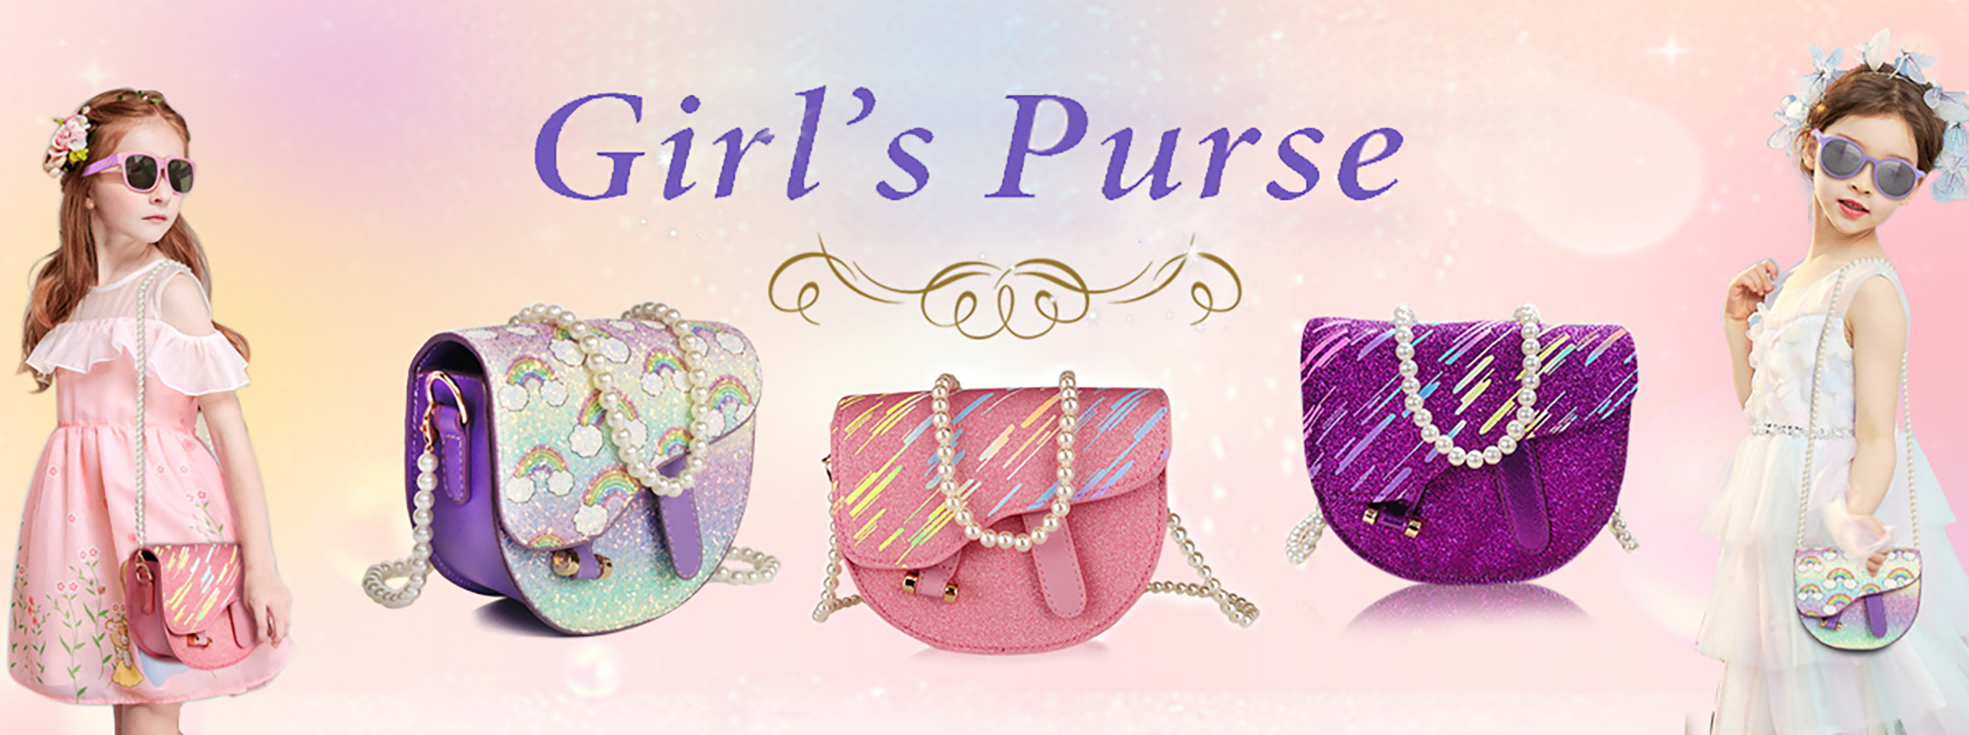 Glitter girl purse